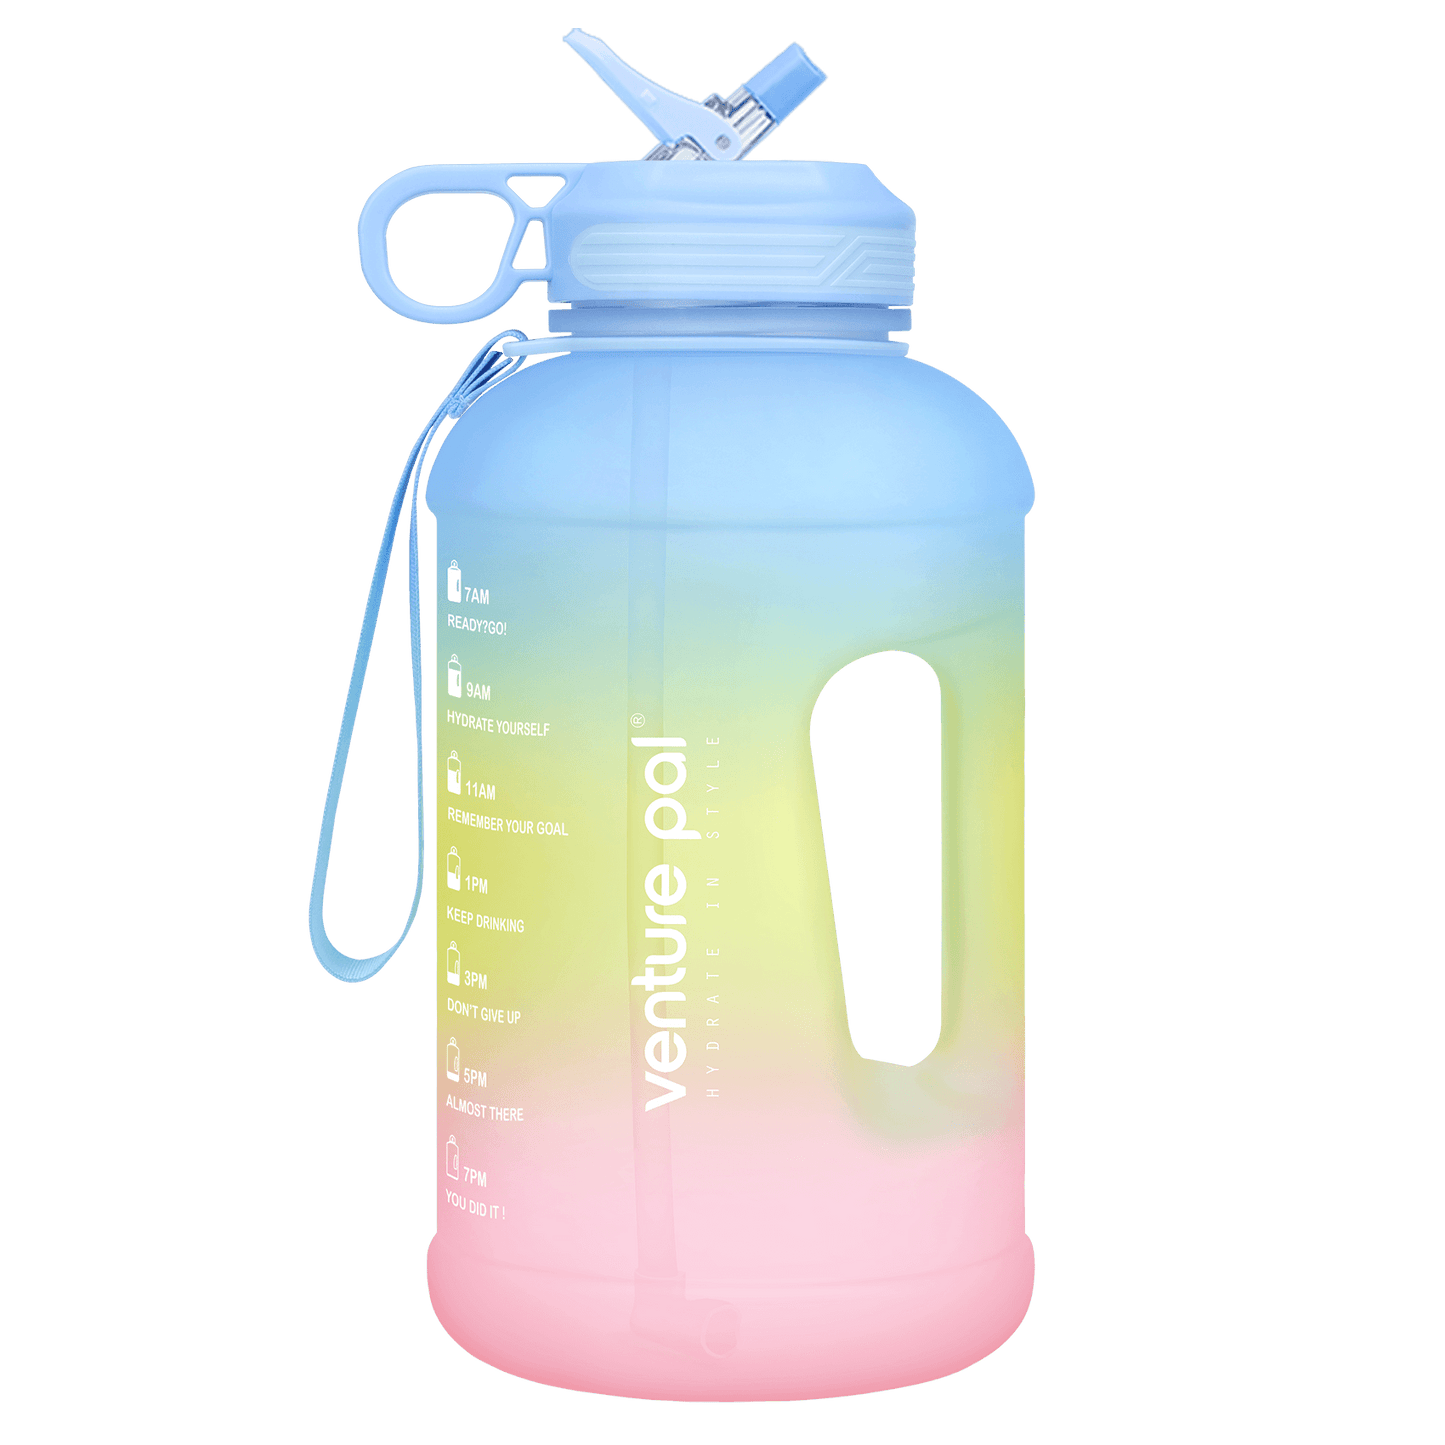 Stephon Marbury's Venture Pal 74oz Motivational Water Bottle